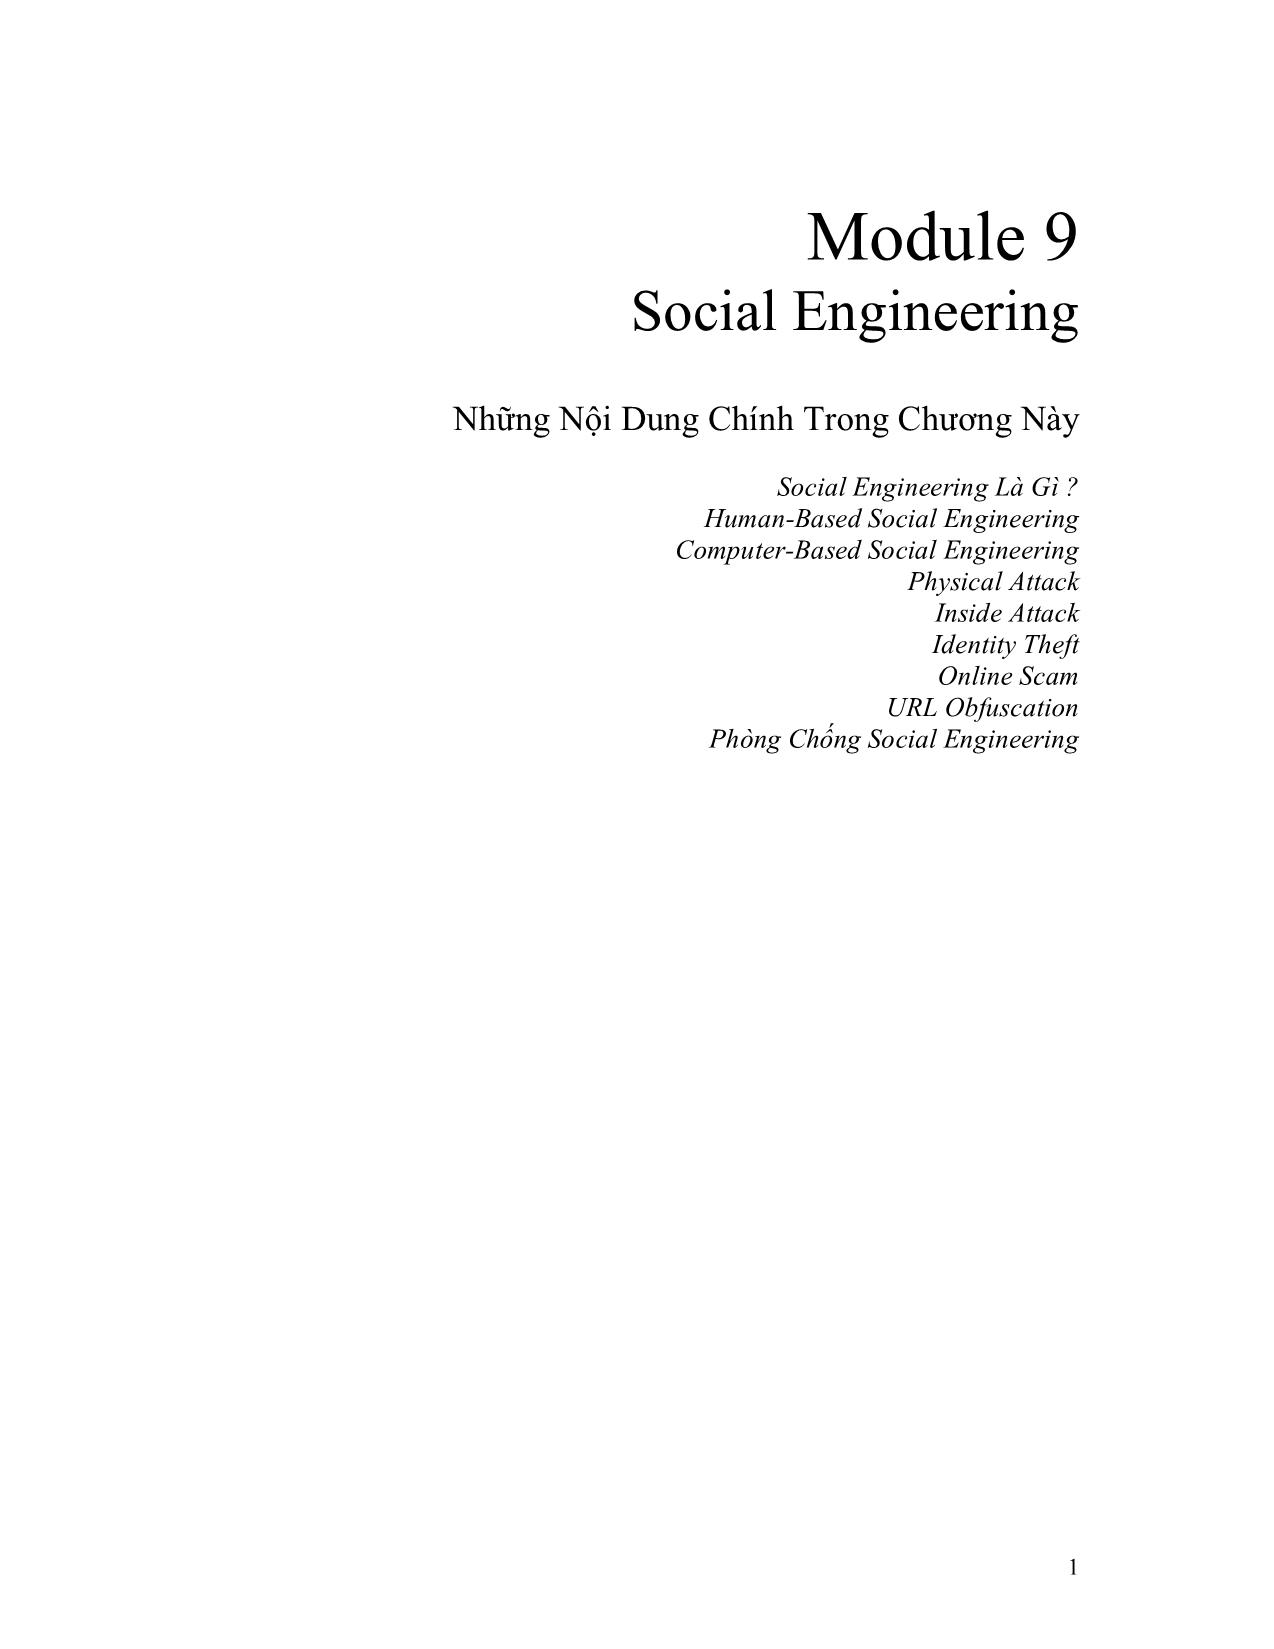 Module 9: Social Engineering trang 1